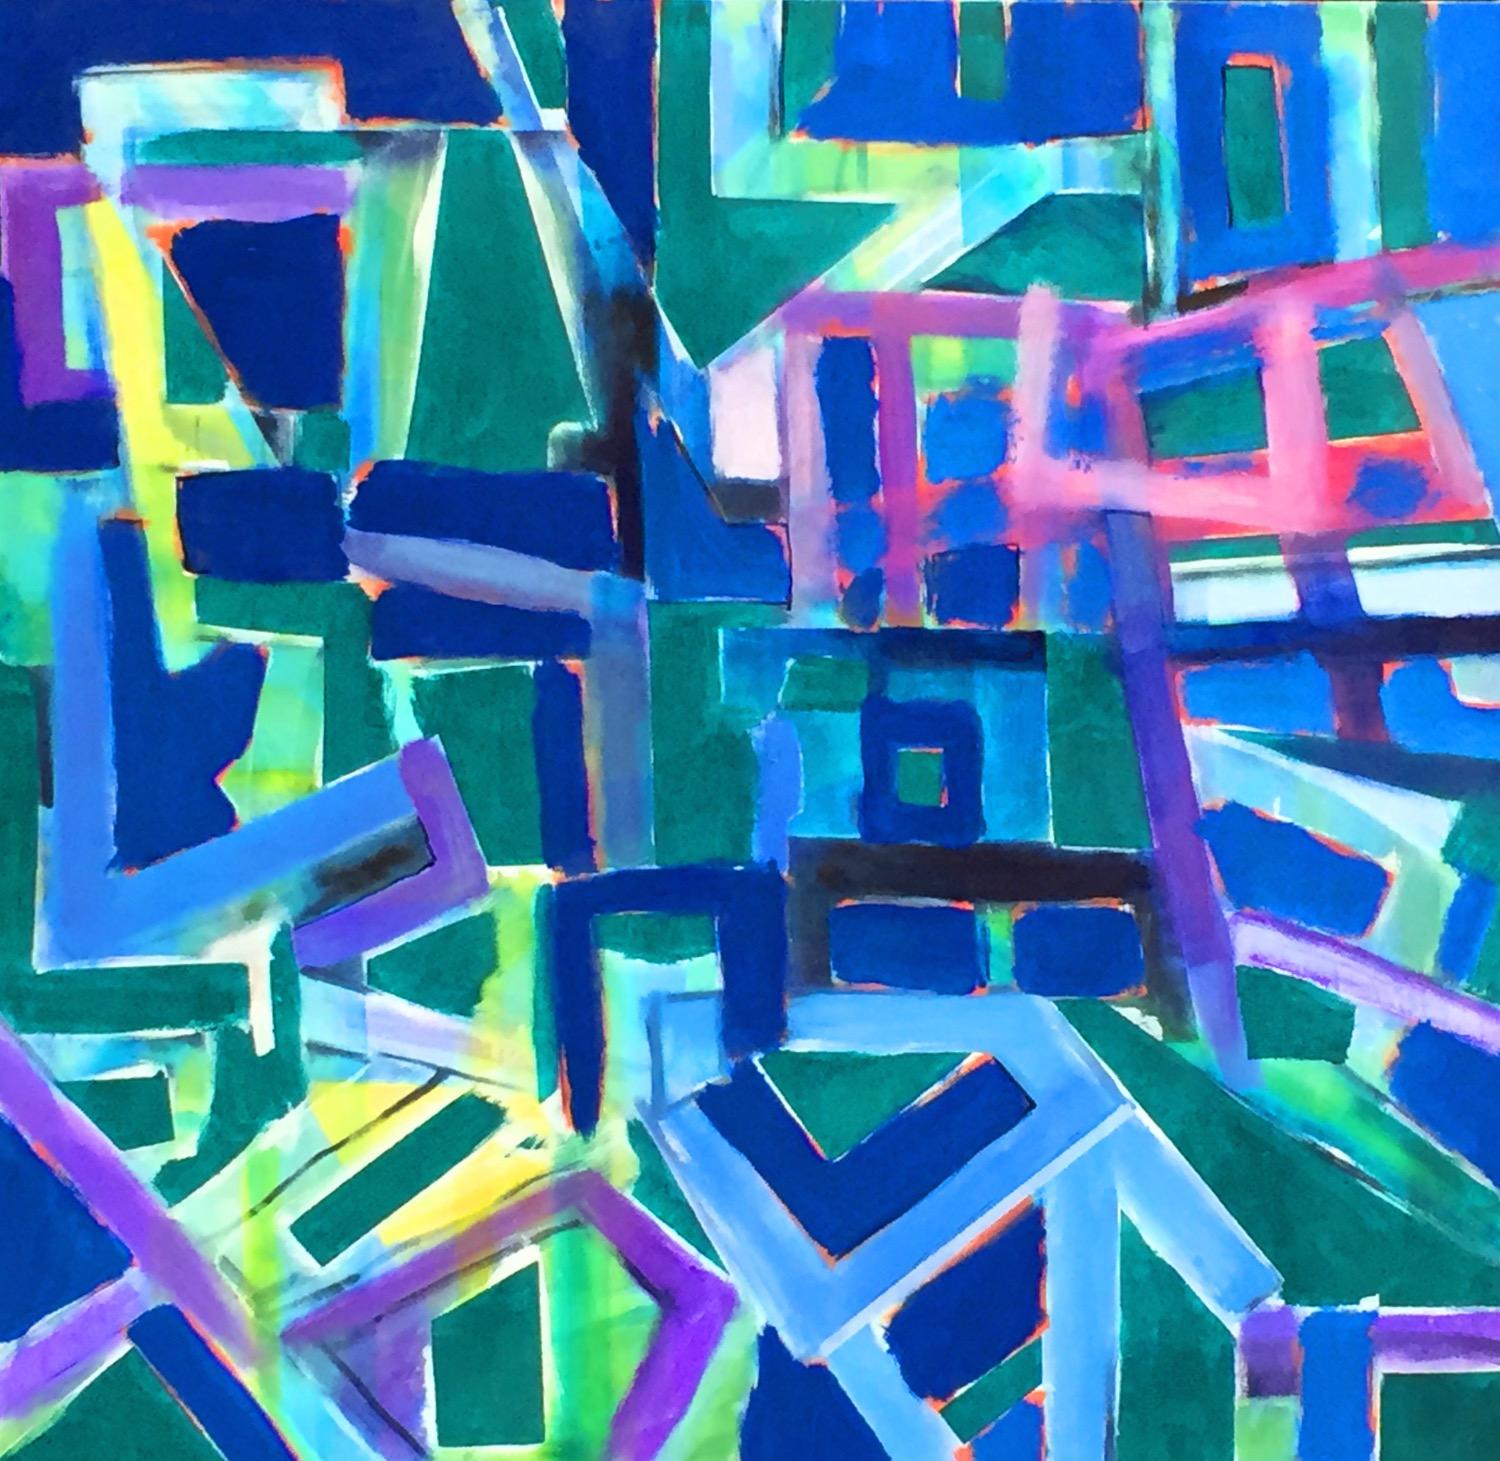 Robert Petrick Still-Life Painting - "Labyrinth" Construction series, East Village New York (Geometric Abstract)